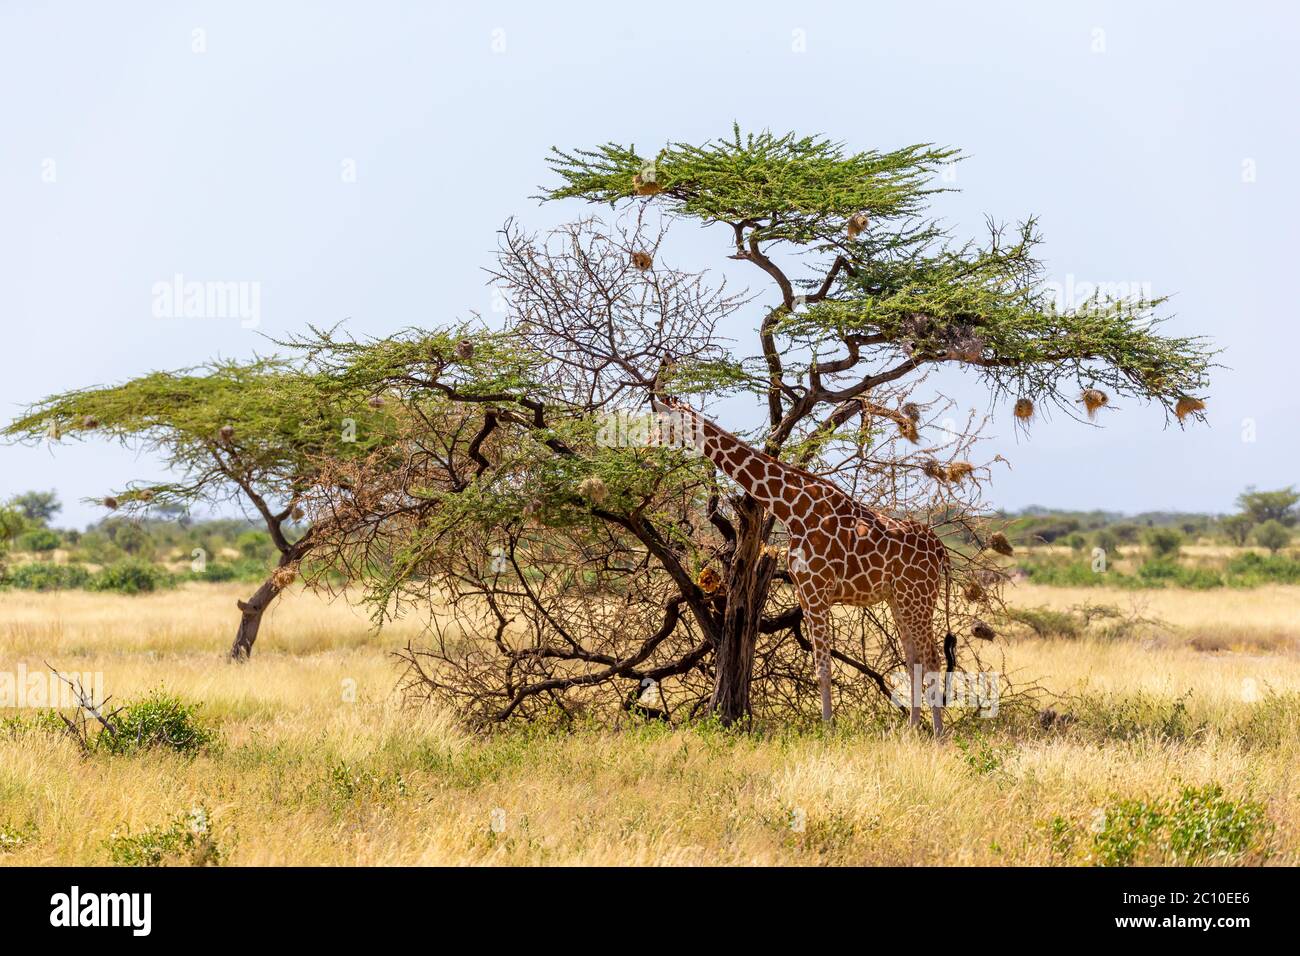 The Somalia giraffes eat the leaves of acacia trees Stock Photo